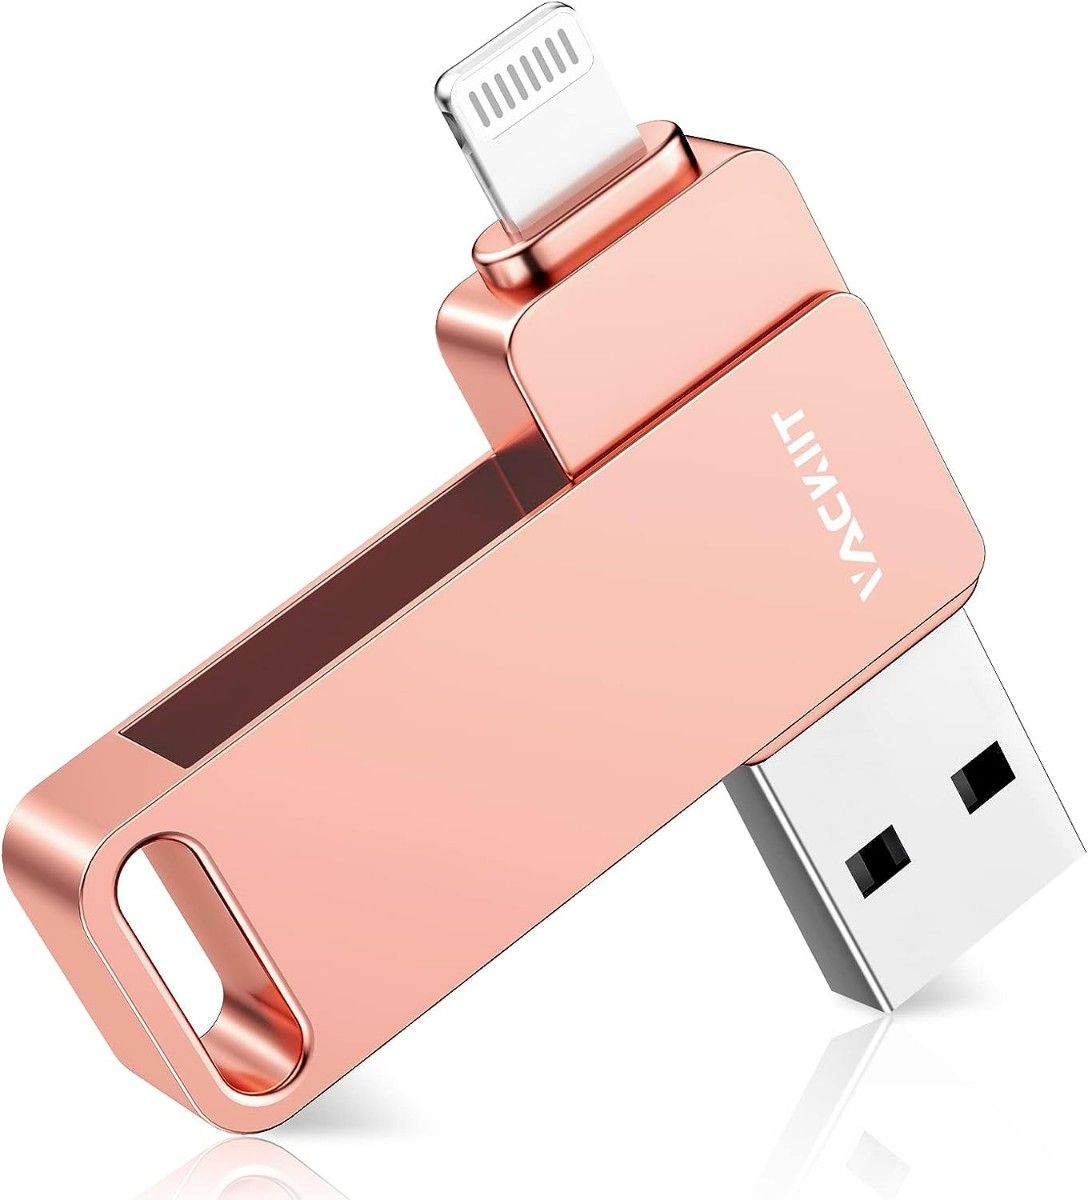 AP109 Vackiit MFi認証 iPhone用USBメモリー 128GB USBフラッシュドライブ 高速USB 3.0